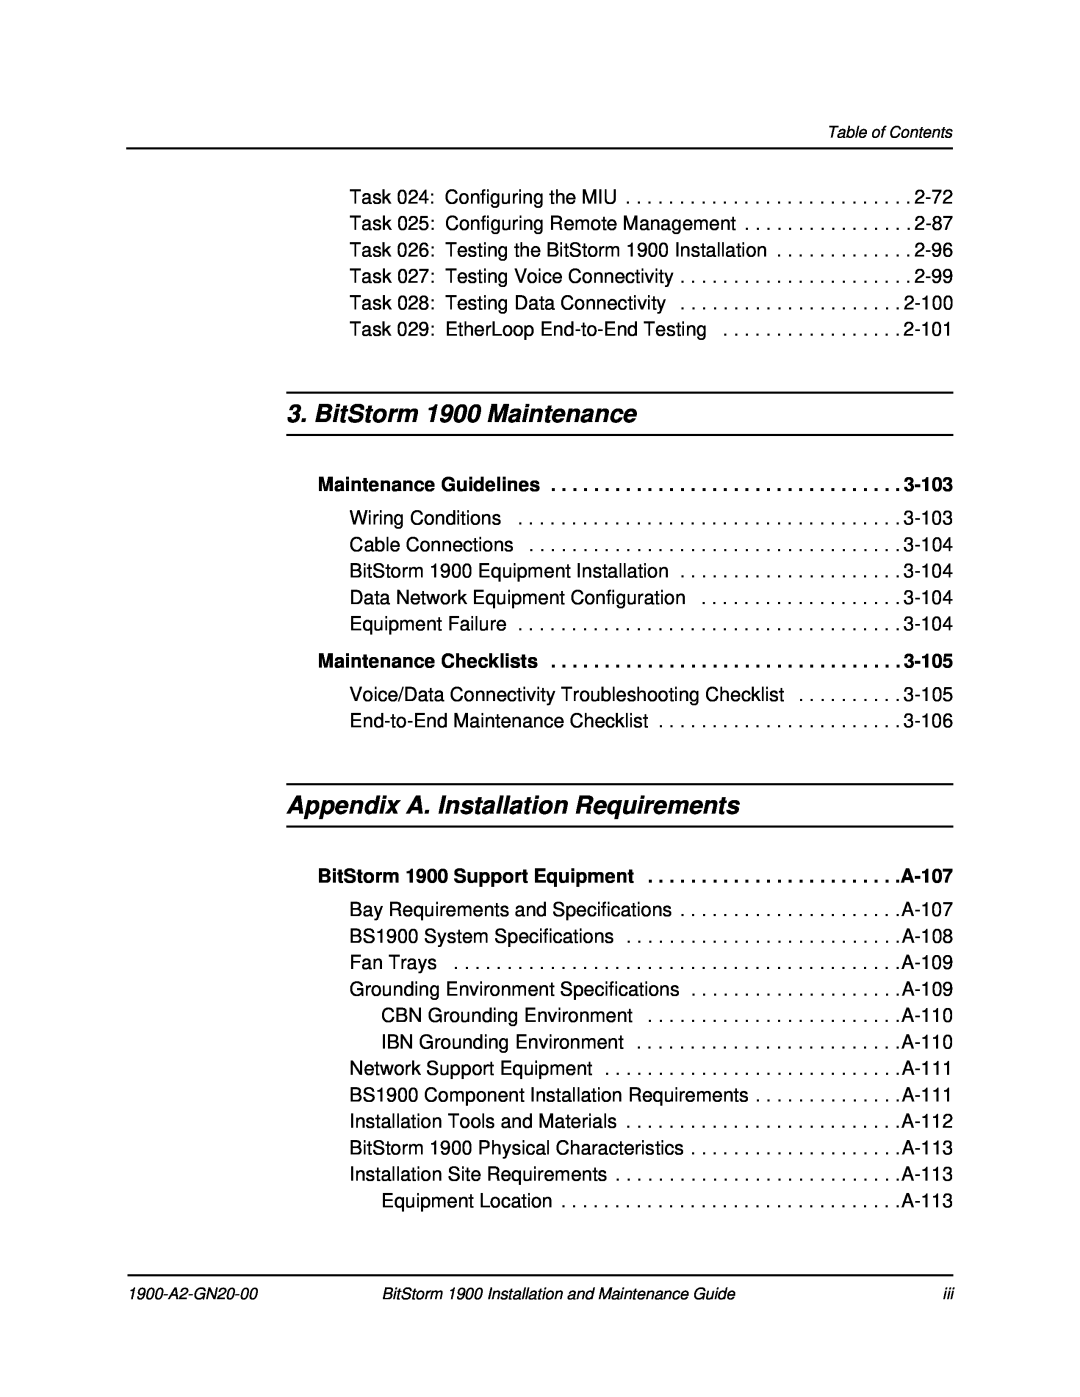 Paradyne manual BitStorm 1900 Maintenance, Appendix A. Installation Requirements, Maintenance Guidelines 